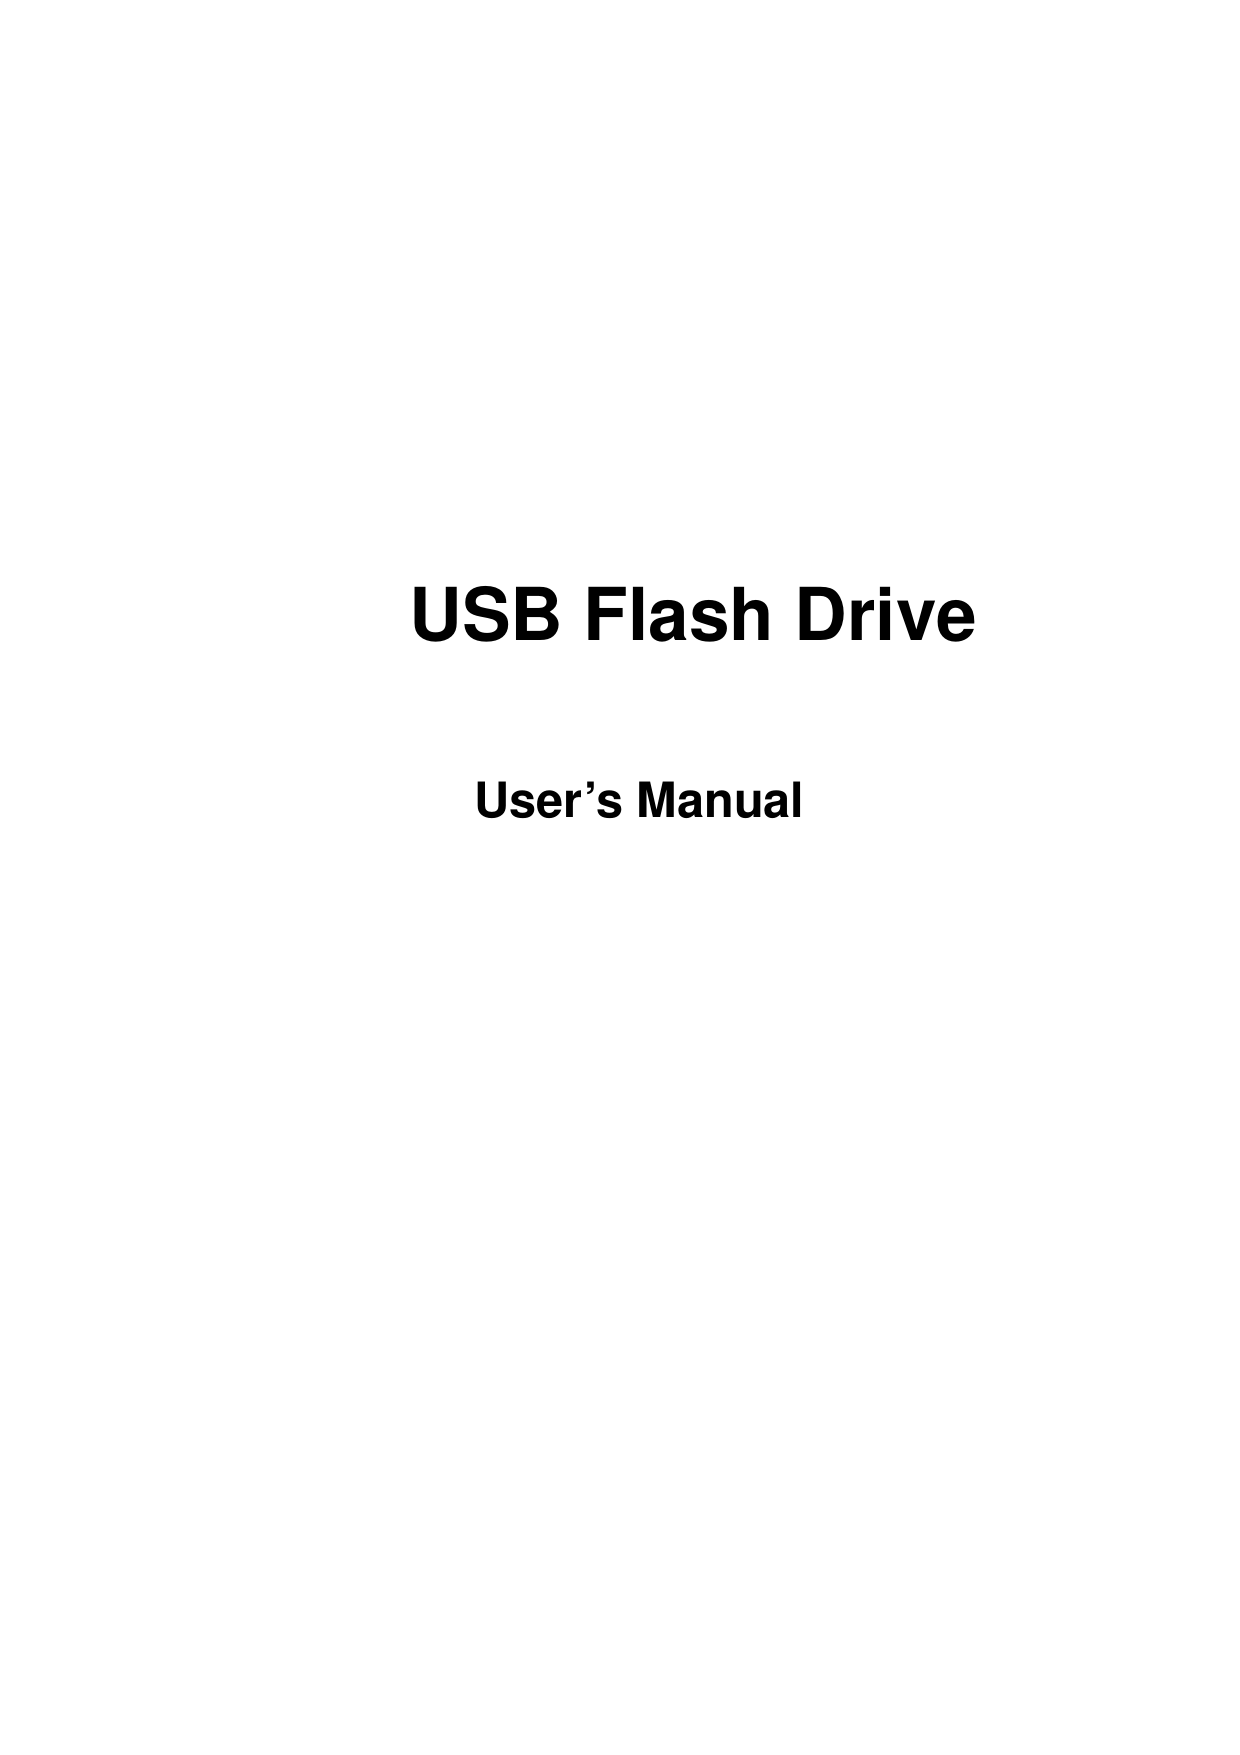     USB Flash Drive  User’s Manual 